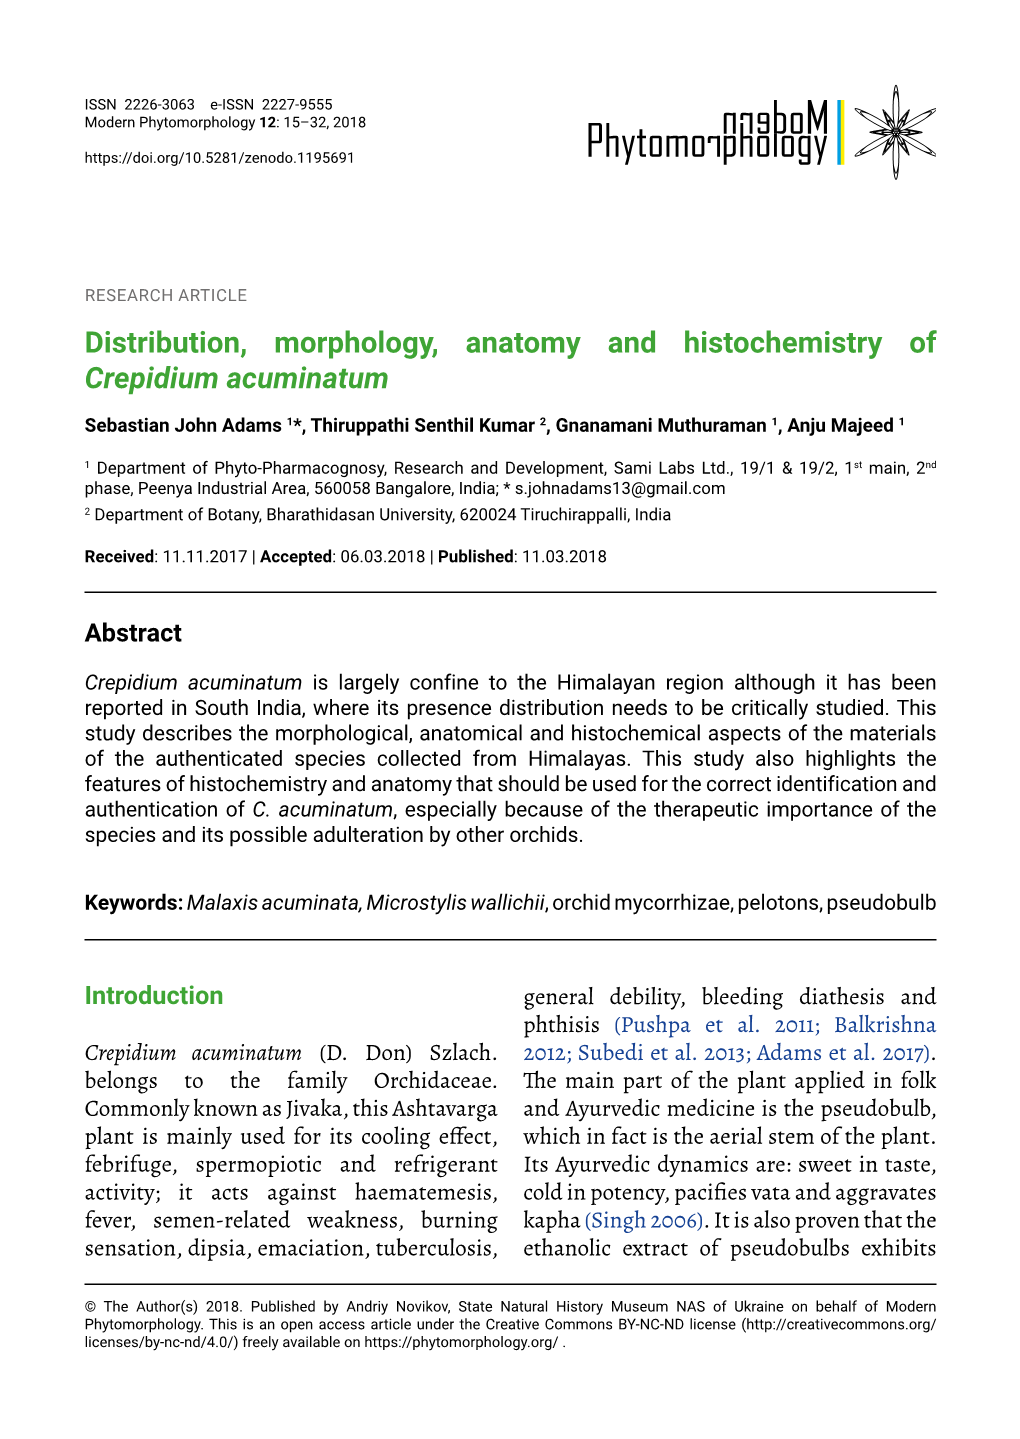 Distribution, Morphology, Anatomy and Histochemistry of Crepidium Acuminatum